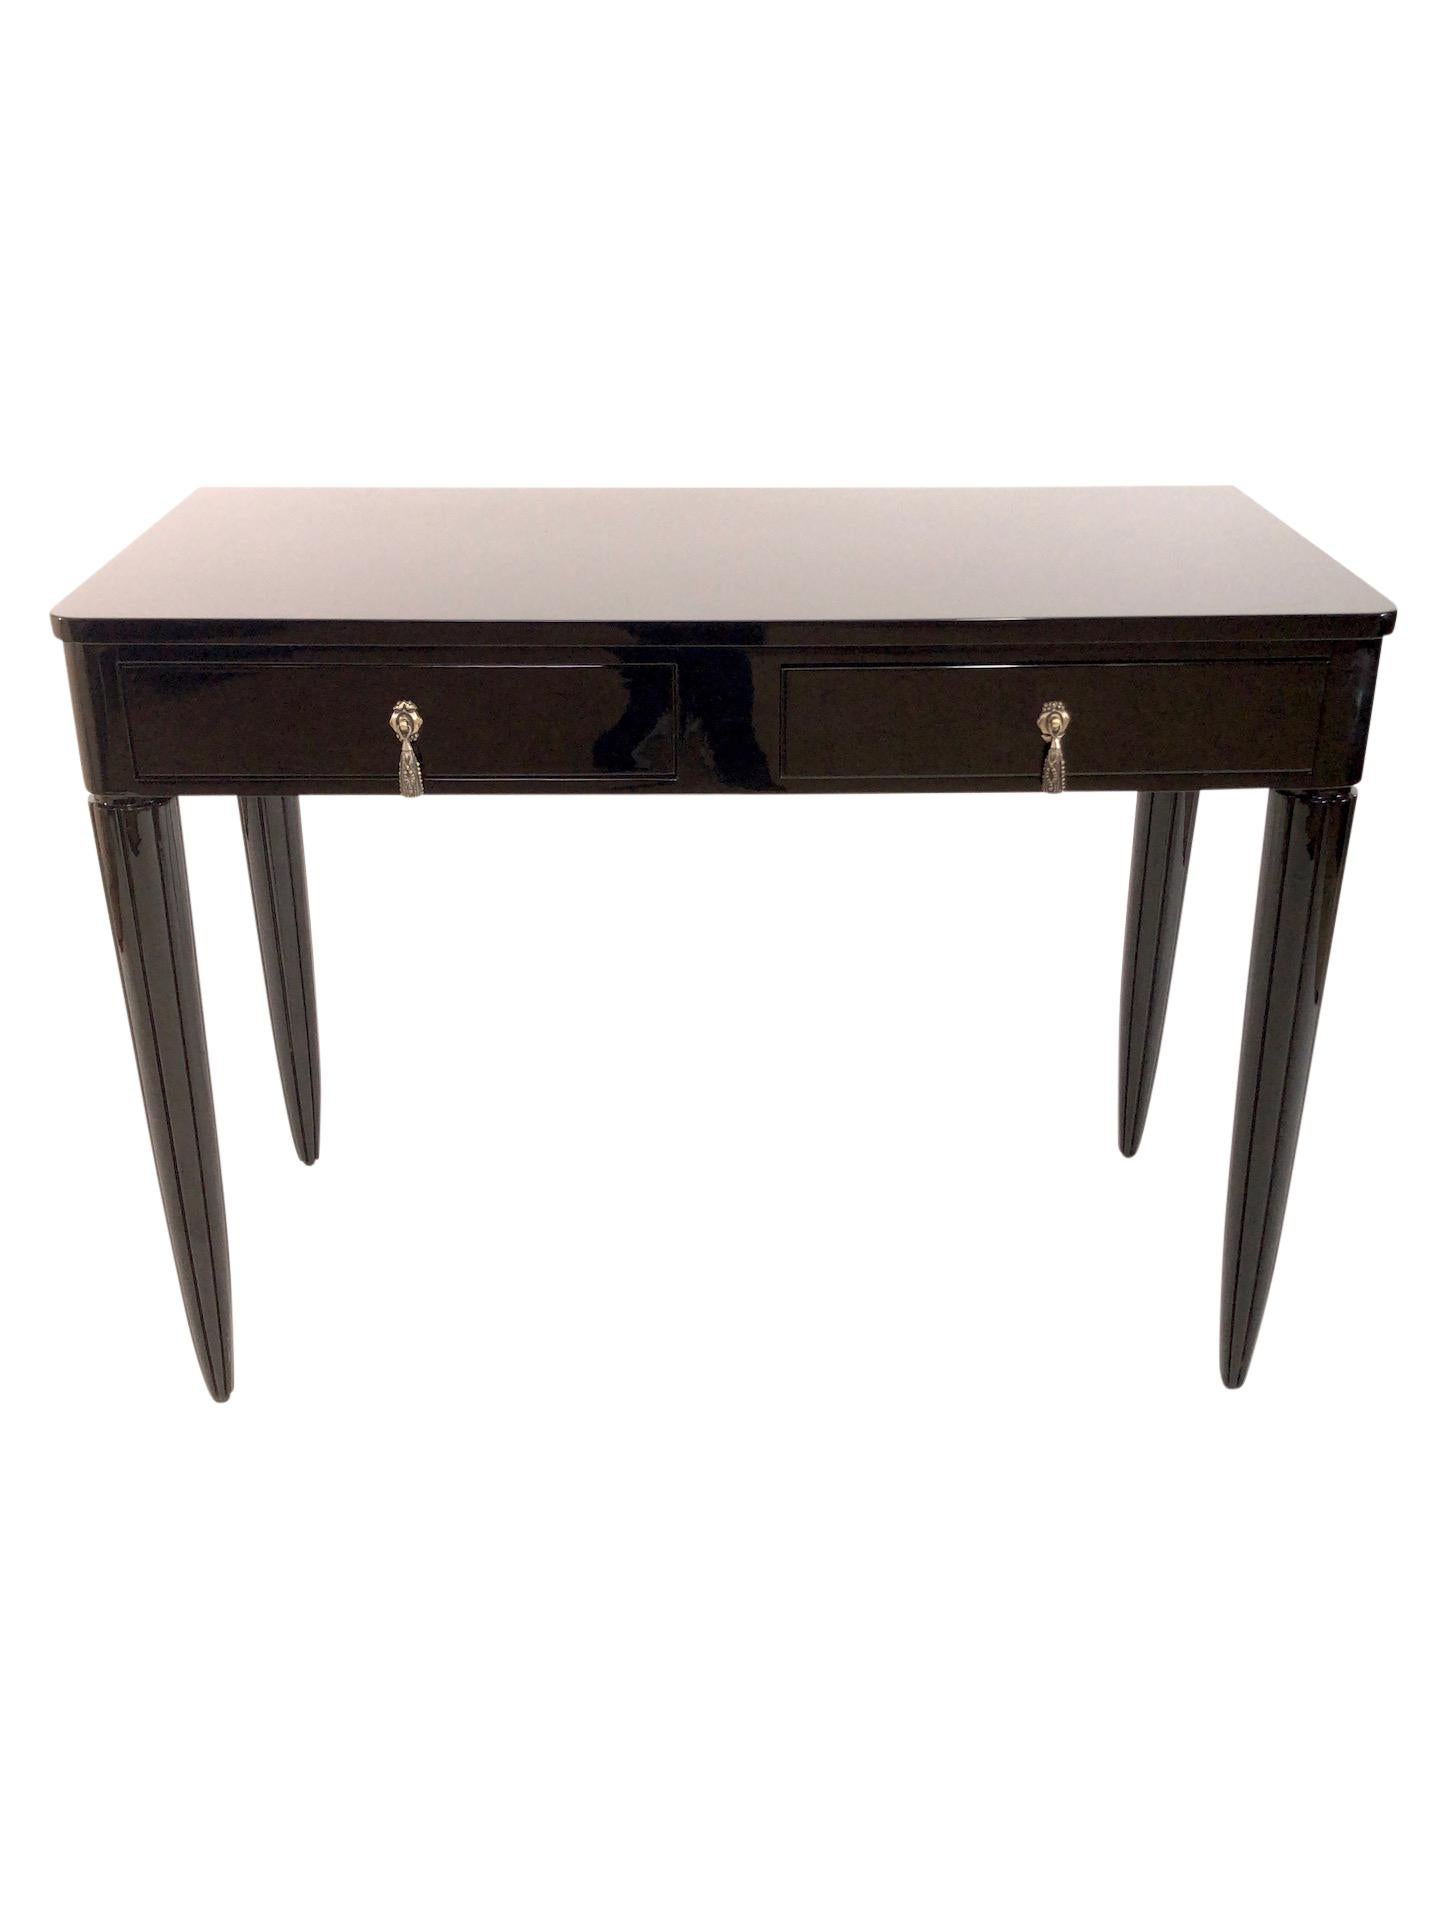 Small Art Deco Desk Black - 3 For Sale on 1stDibs